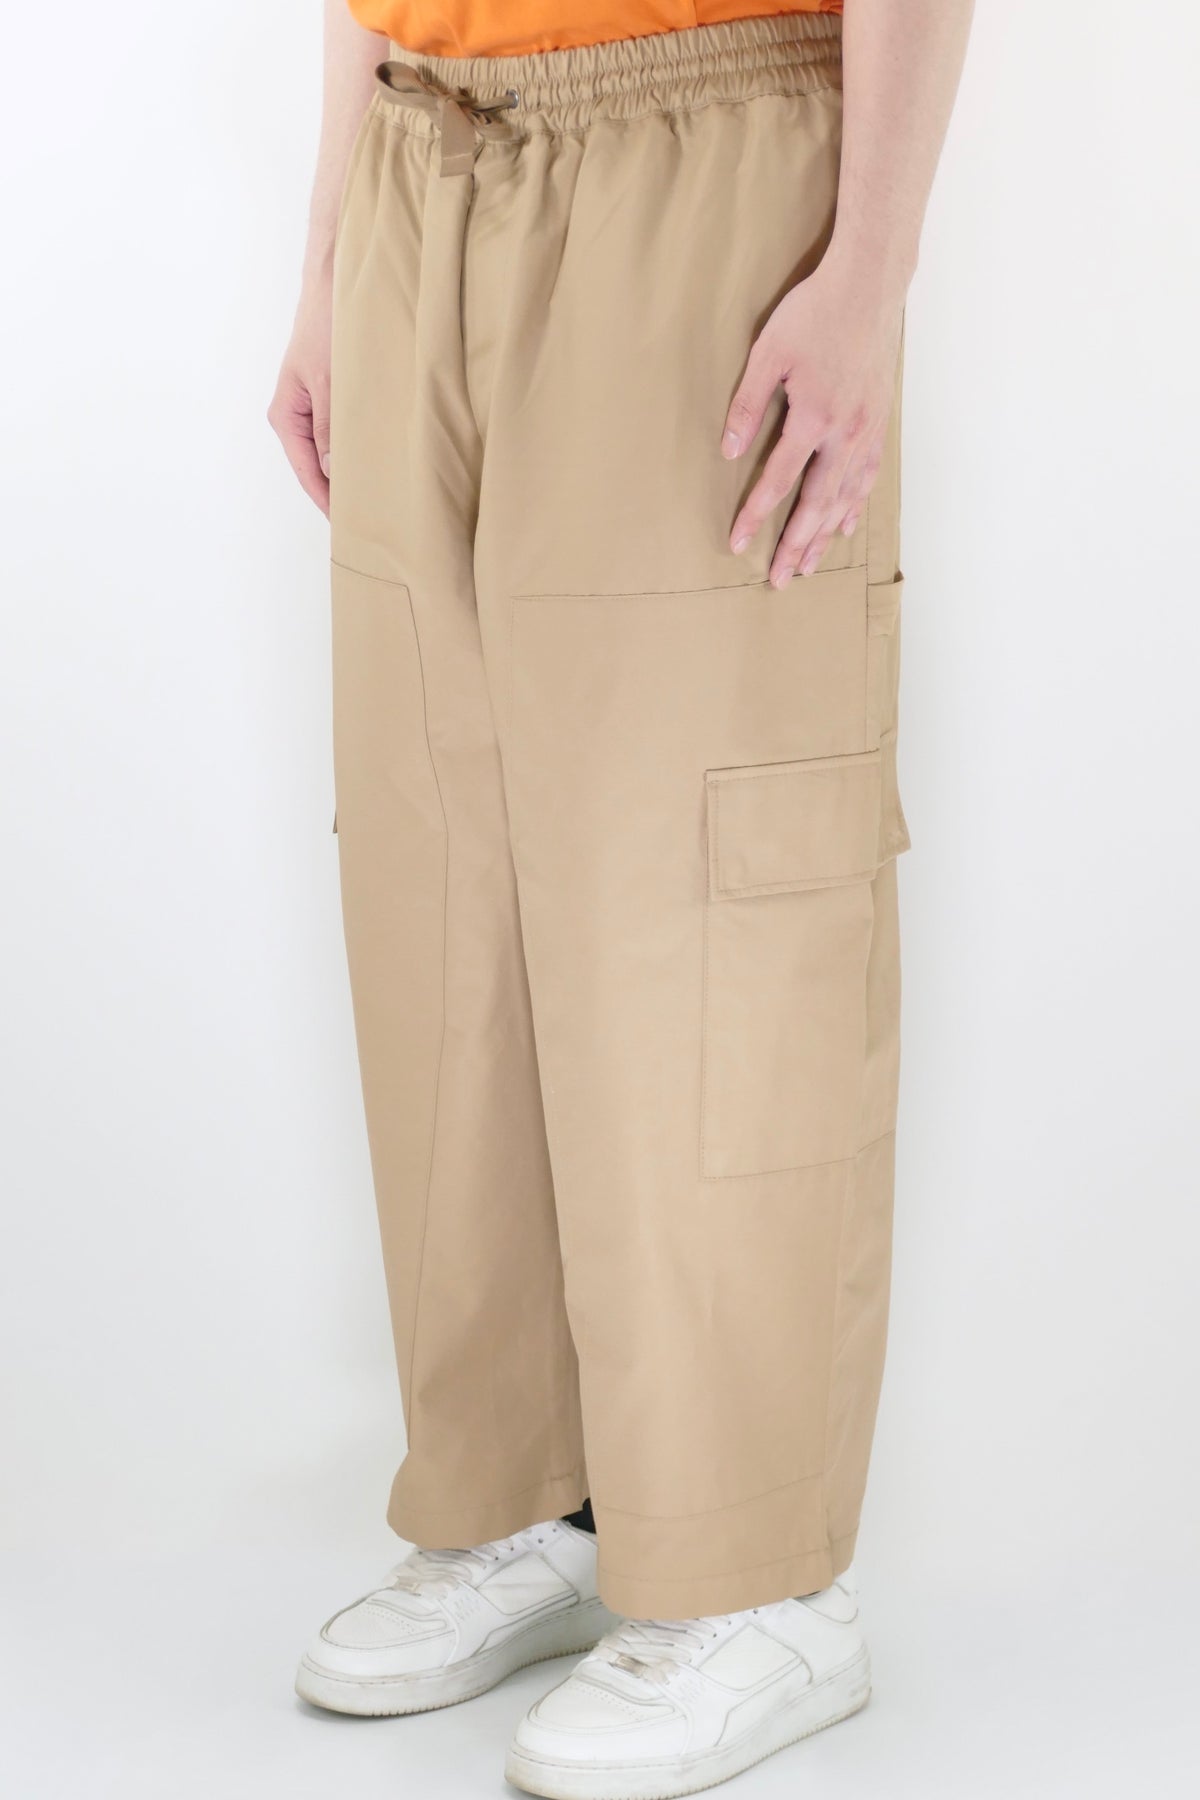 Maison Kitsuné Japanese Worker Pants - Beige